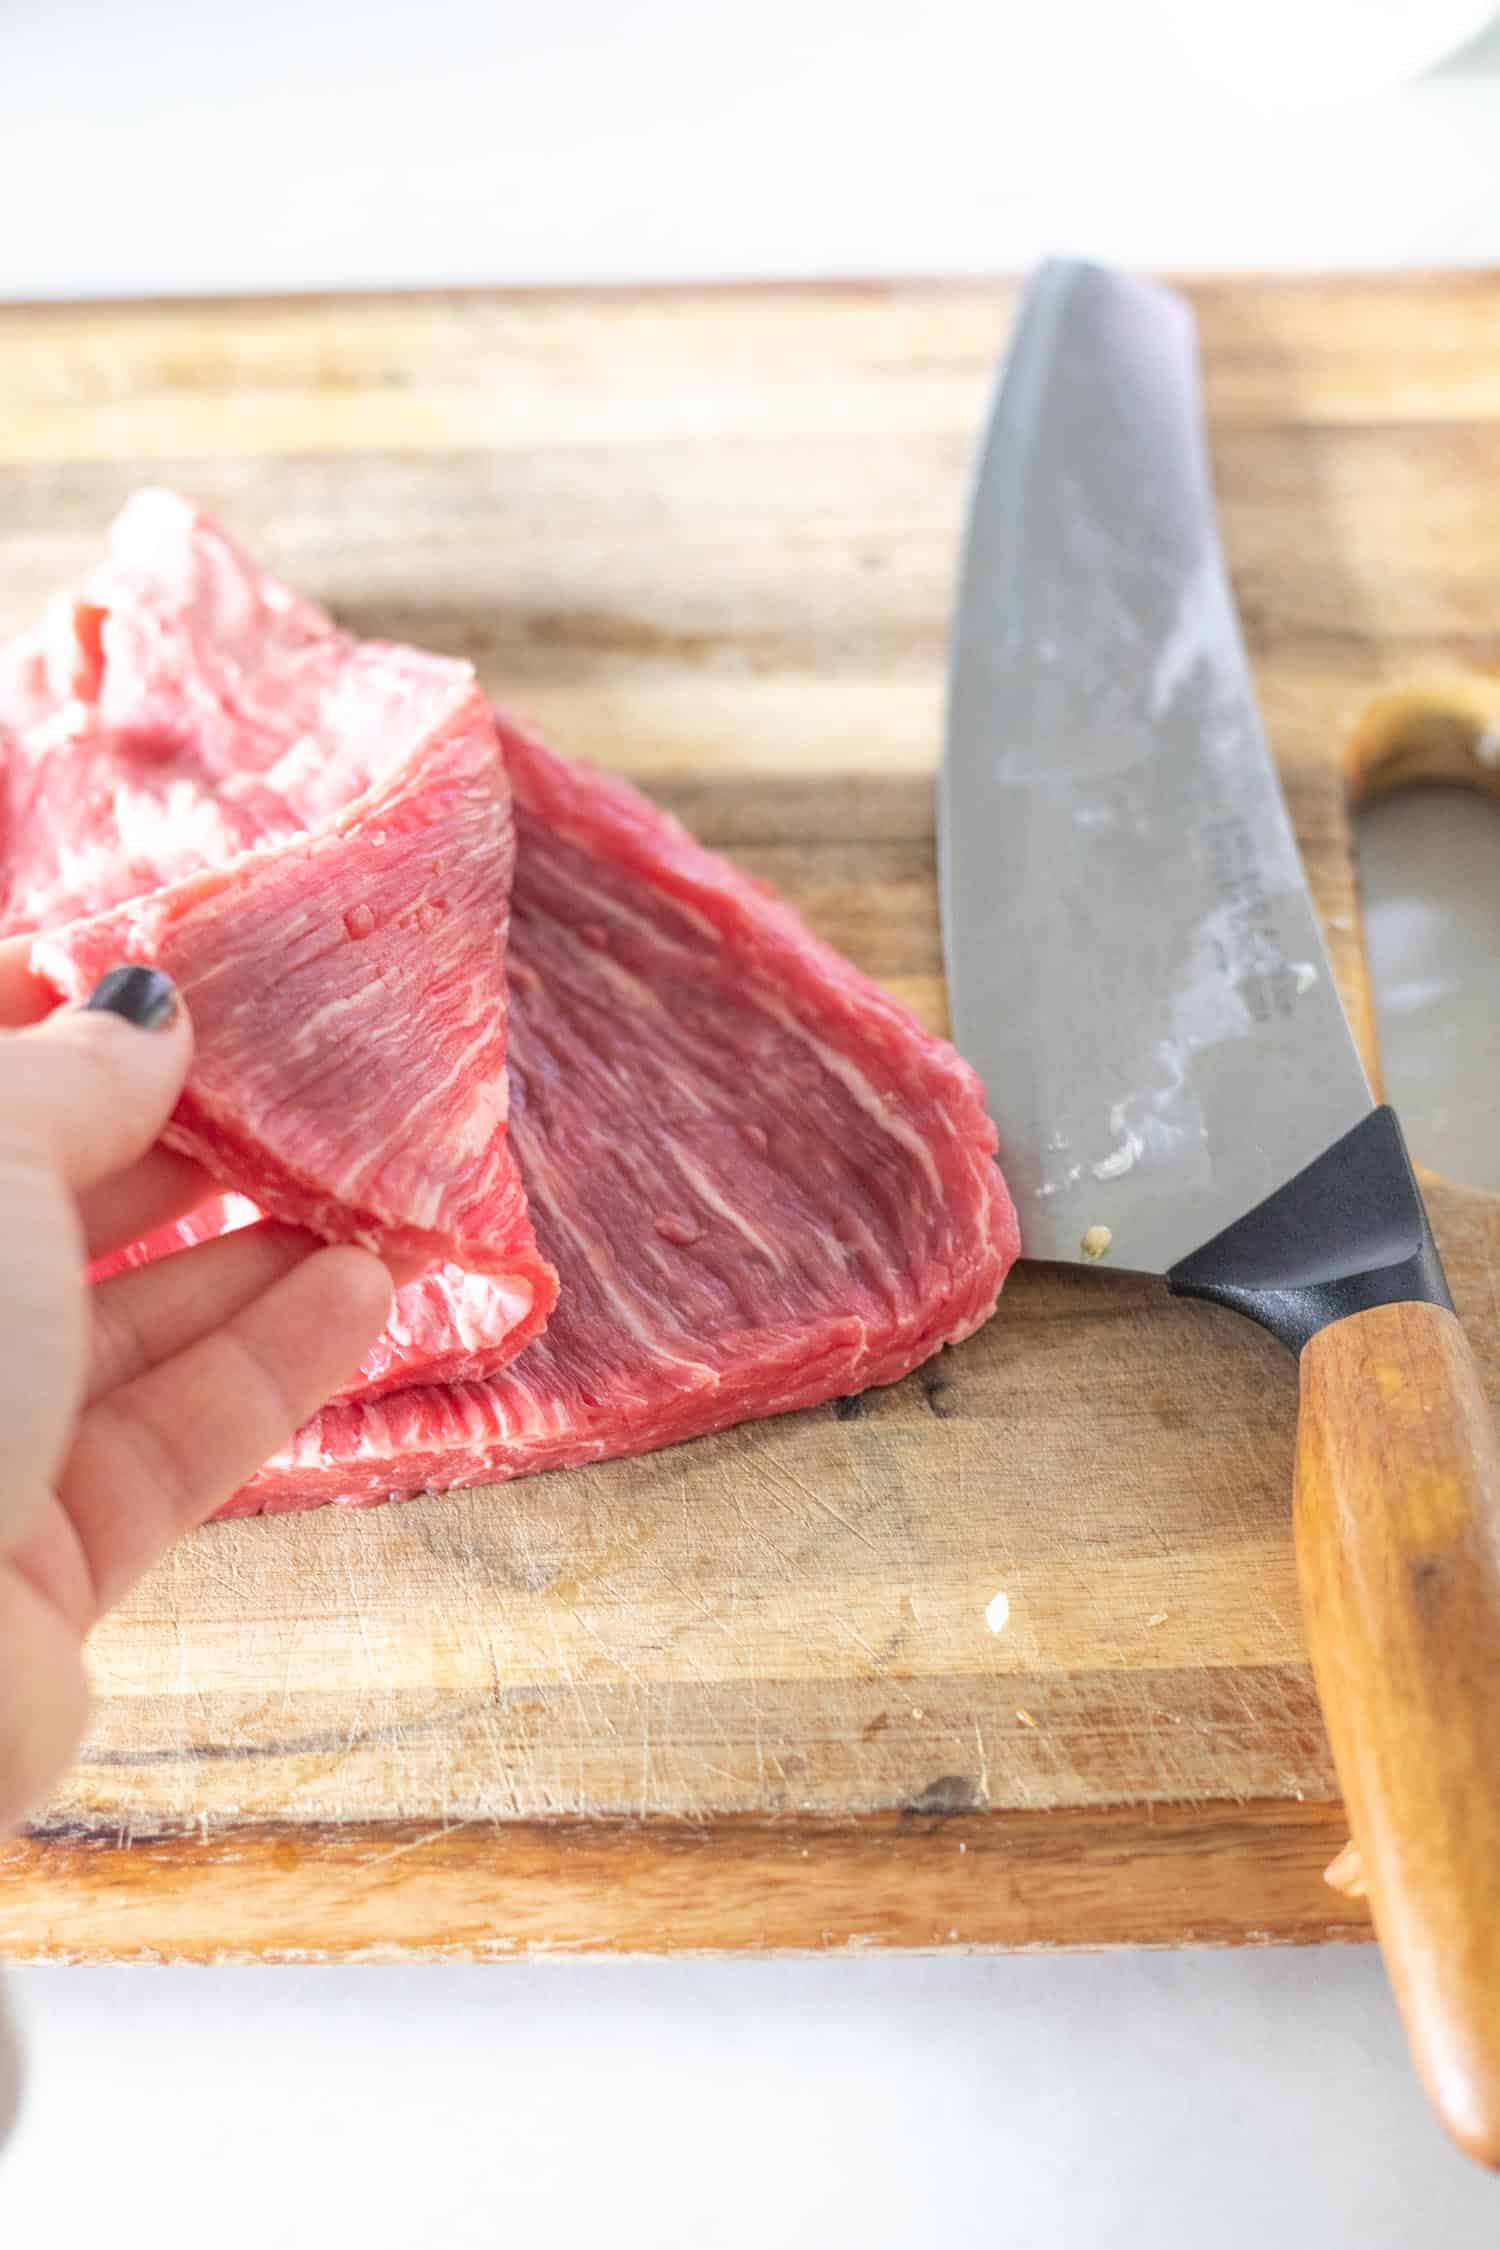 cutting the flank steak